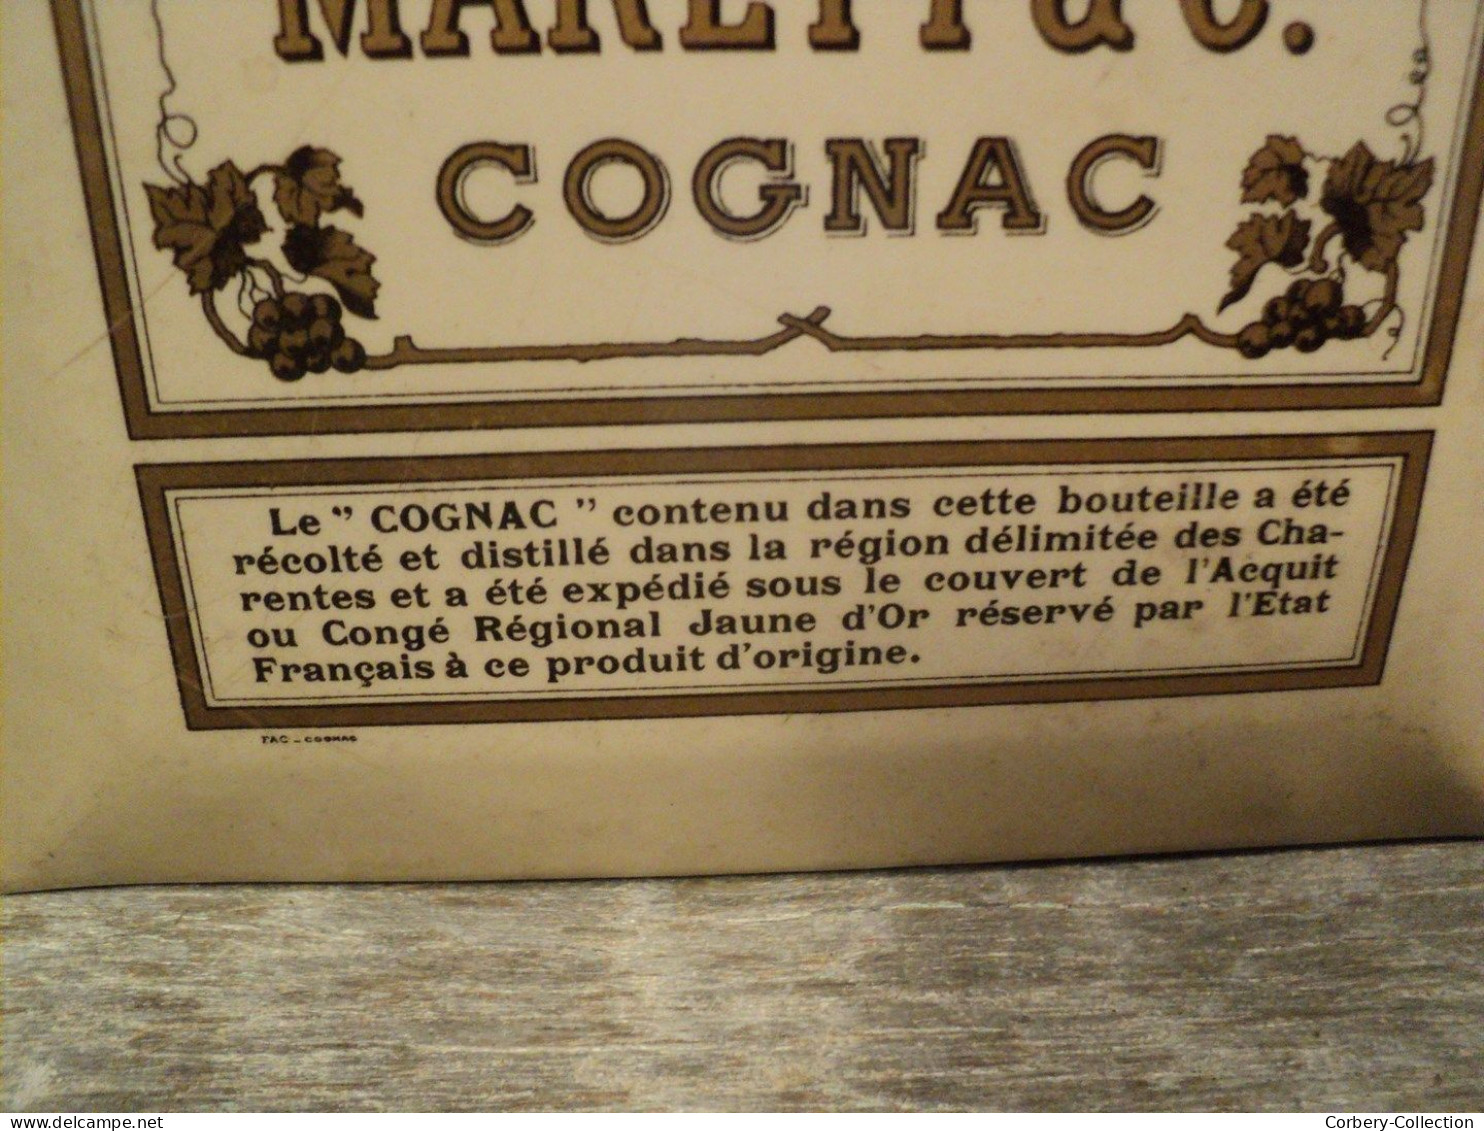 Glacoïde Publicitaire Cognac Marett & Co Fondée En 1822. - Targhe Di Cartone